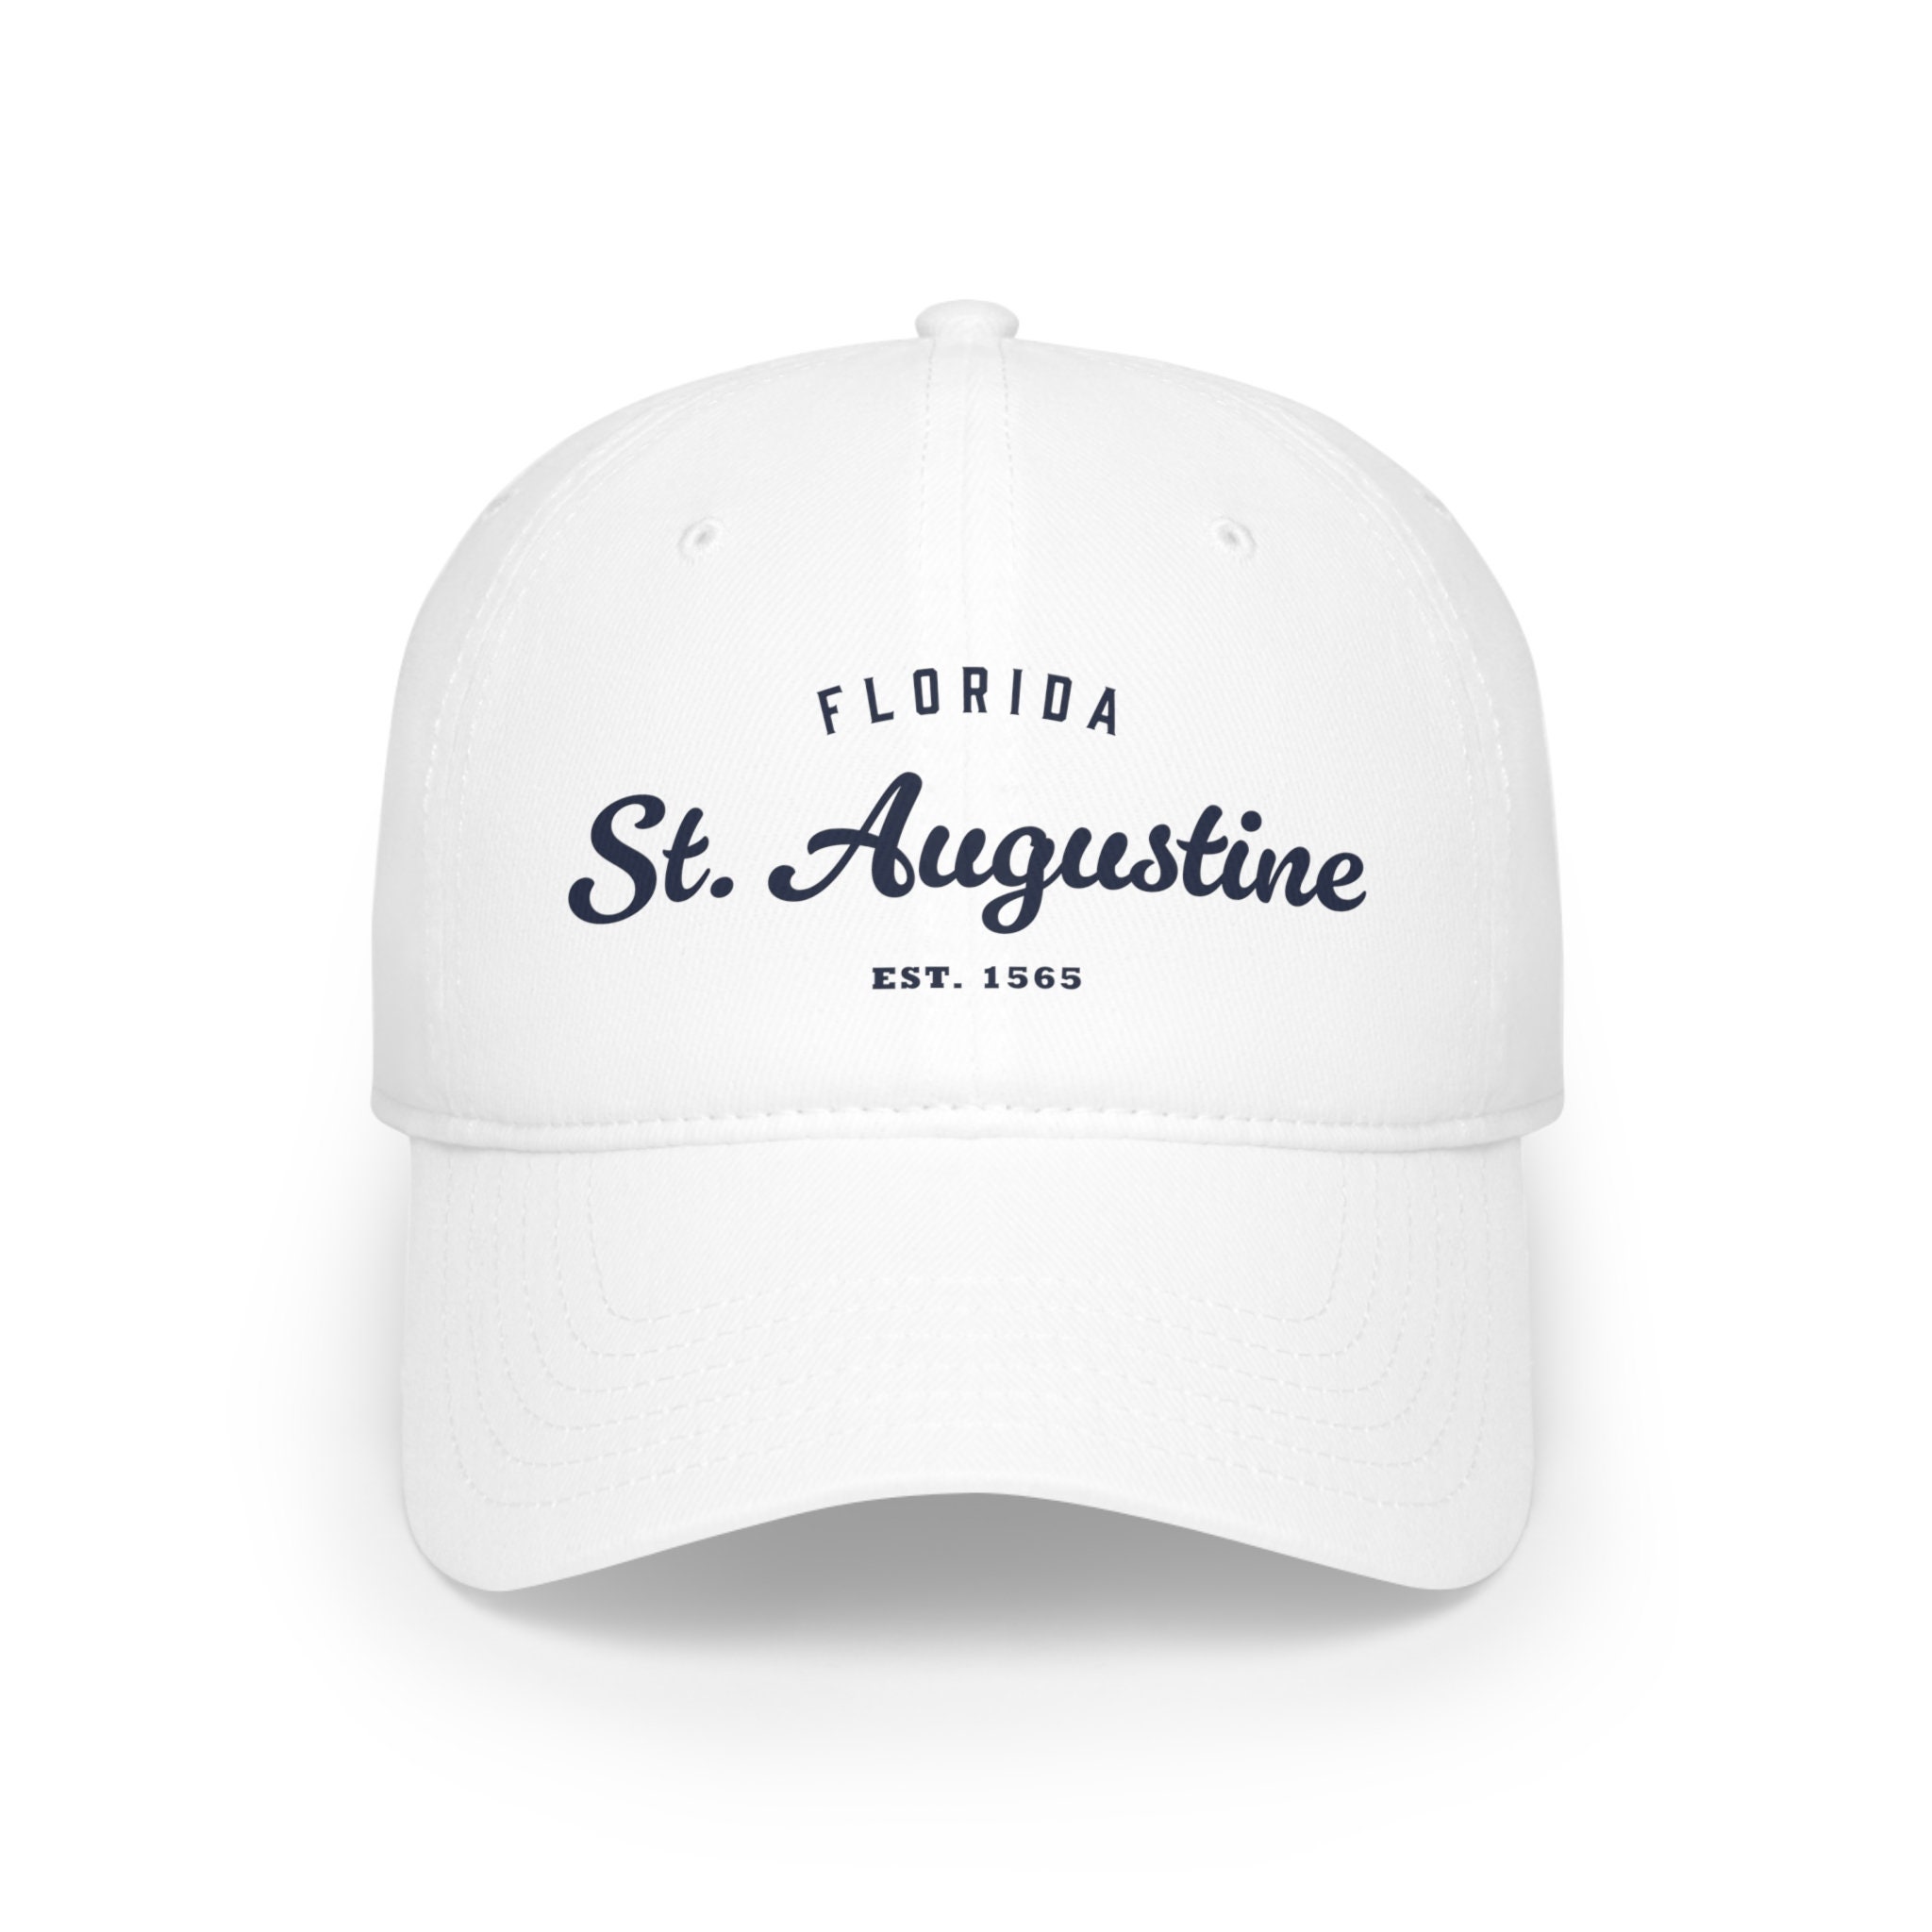 St Augustine Dad Hat St Augustine Florida Baseball Cap Saint Augustine City  Souvenir St Augustine Gift Idea St Augustine FL Low Profile Cap 